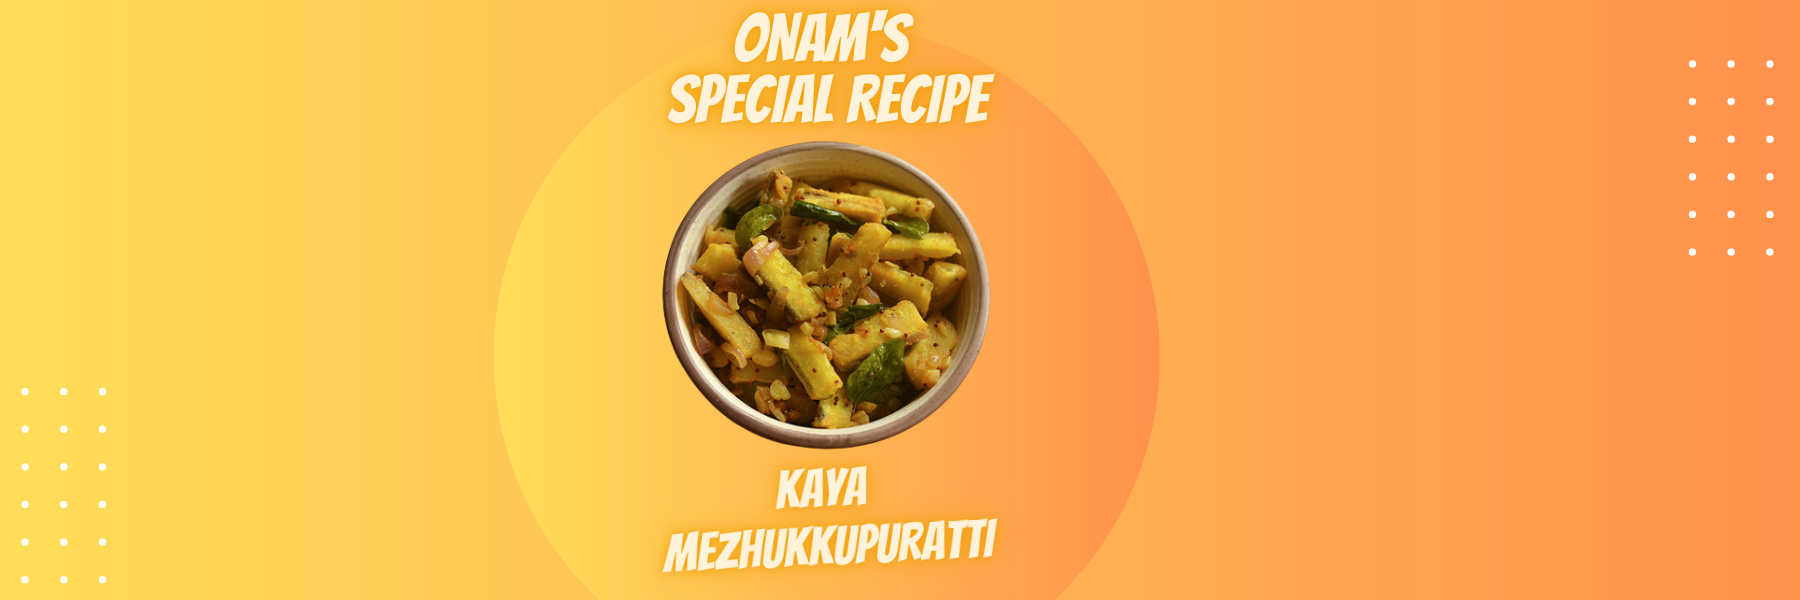 Onam’s Special Recipe 2- Kaya Mezhukkupuratti FromIndia.com